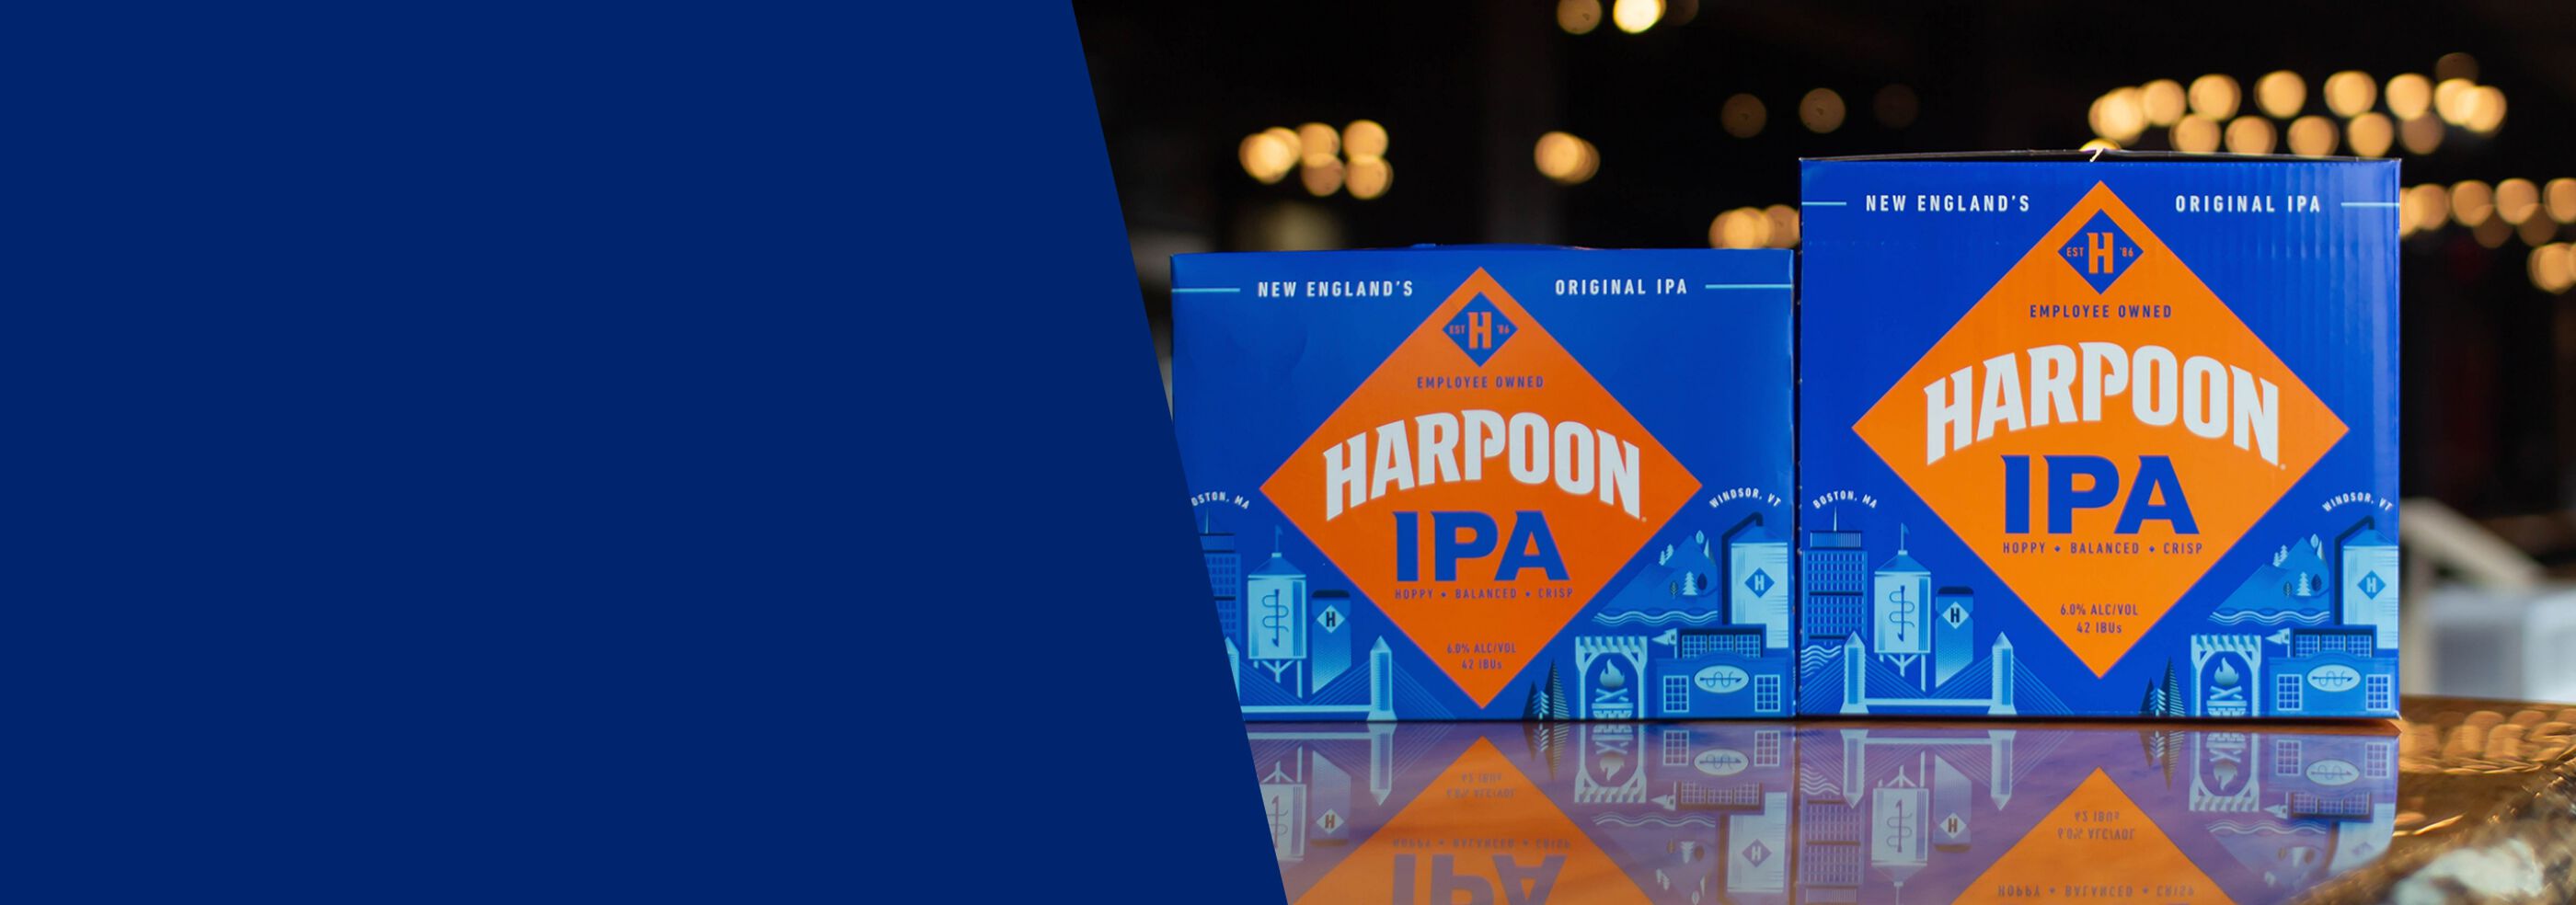 Cases of Harpoon IPA